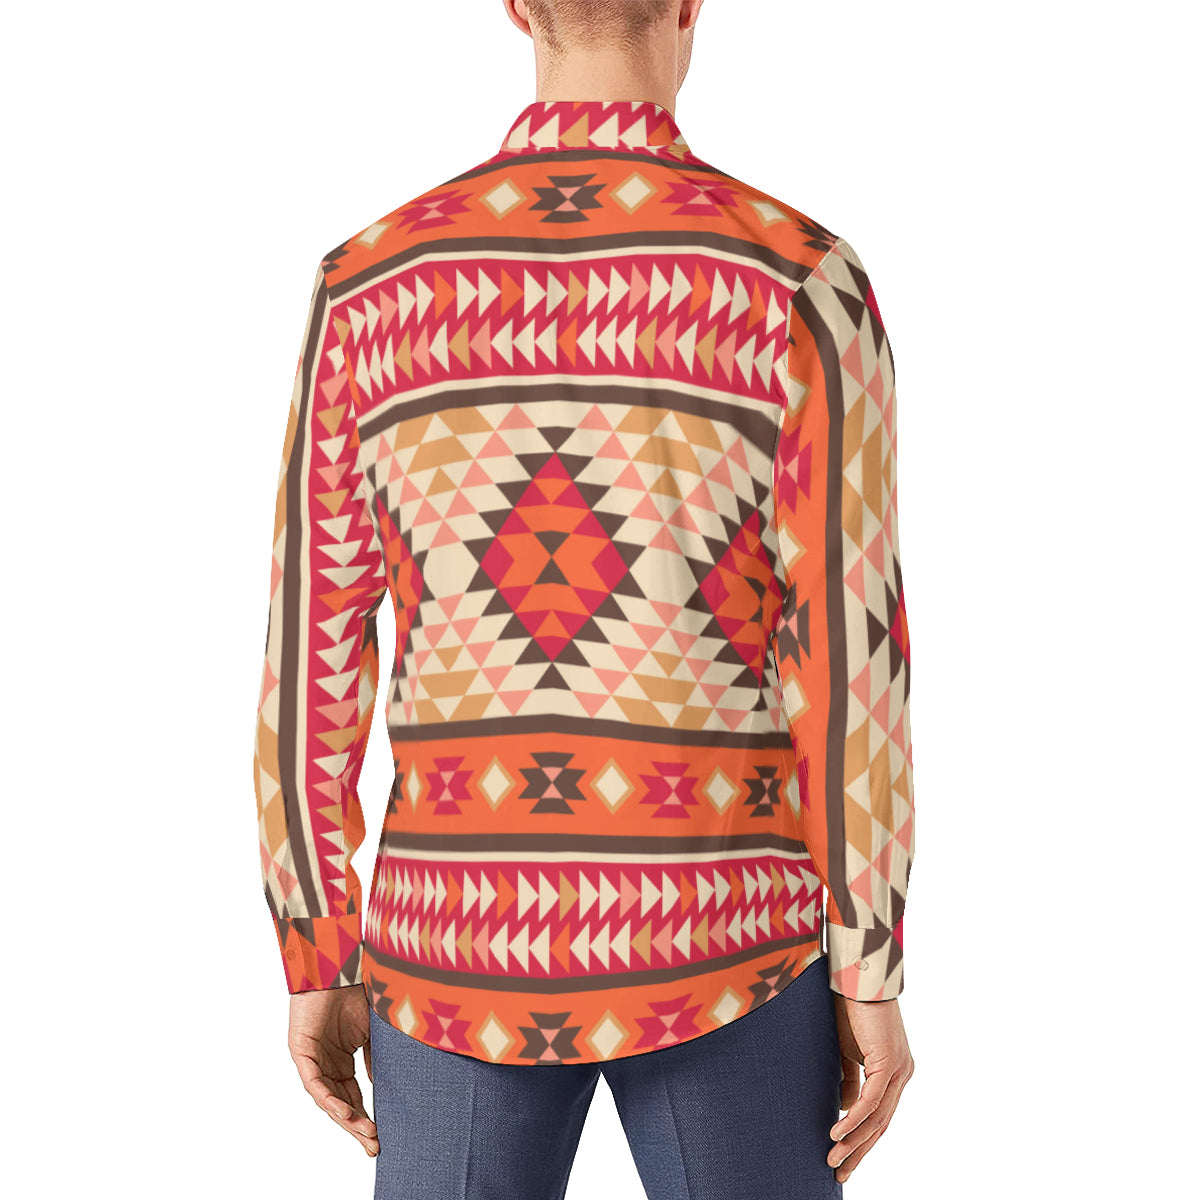 Western Shirt, Western Aztec Shirt, Aztec Graphic Shirt, Aztec patterns, Native American Shirt, Boho Shirt, Orange Bohemian Shirt